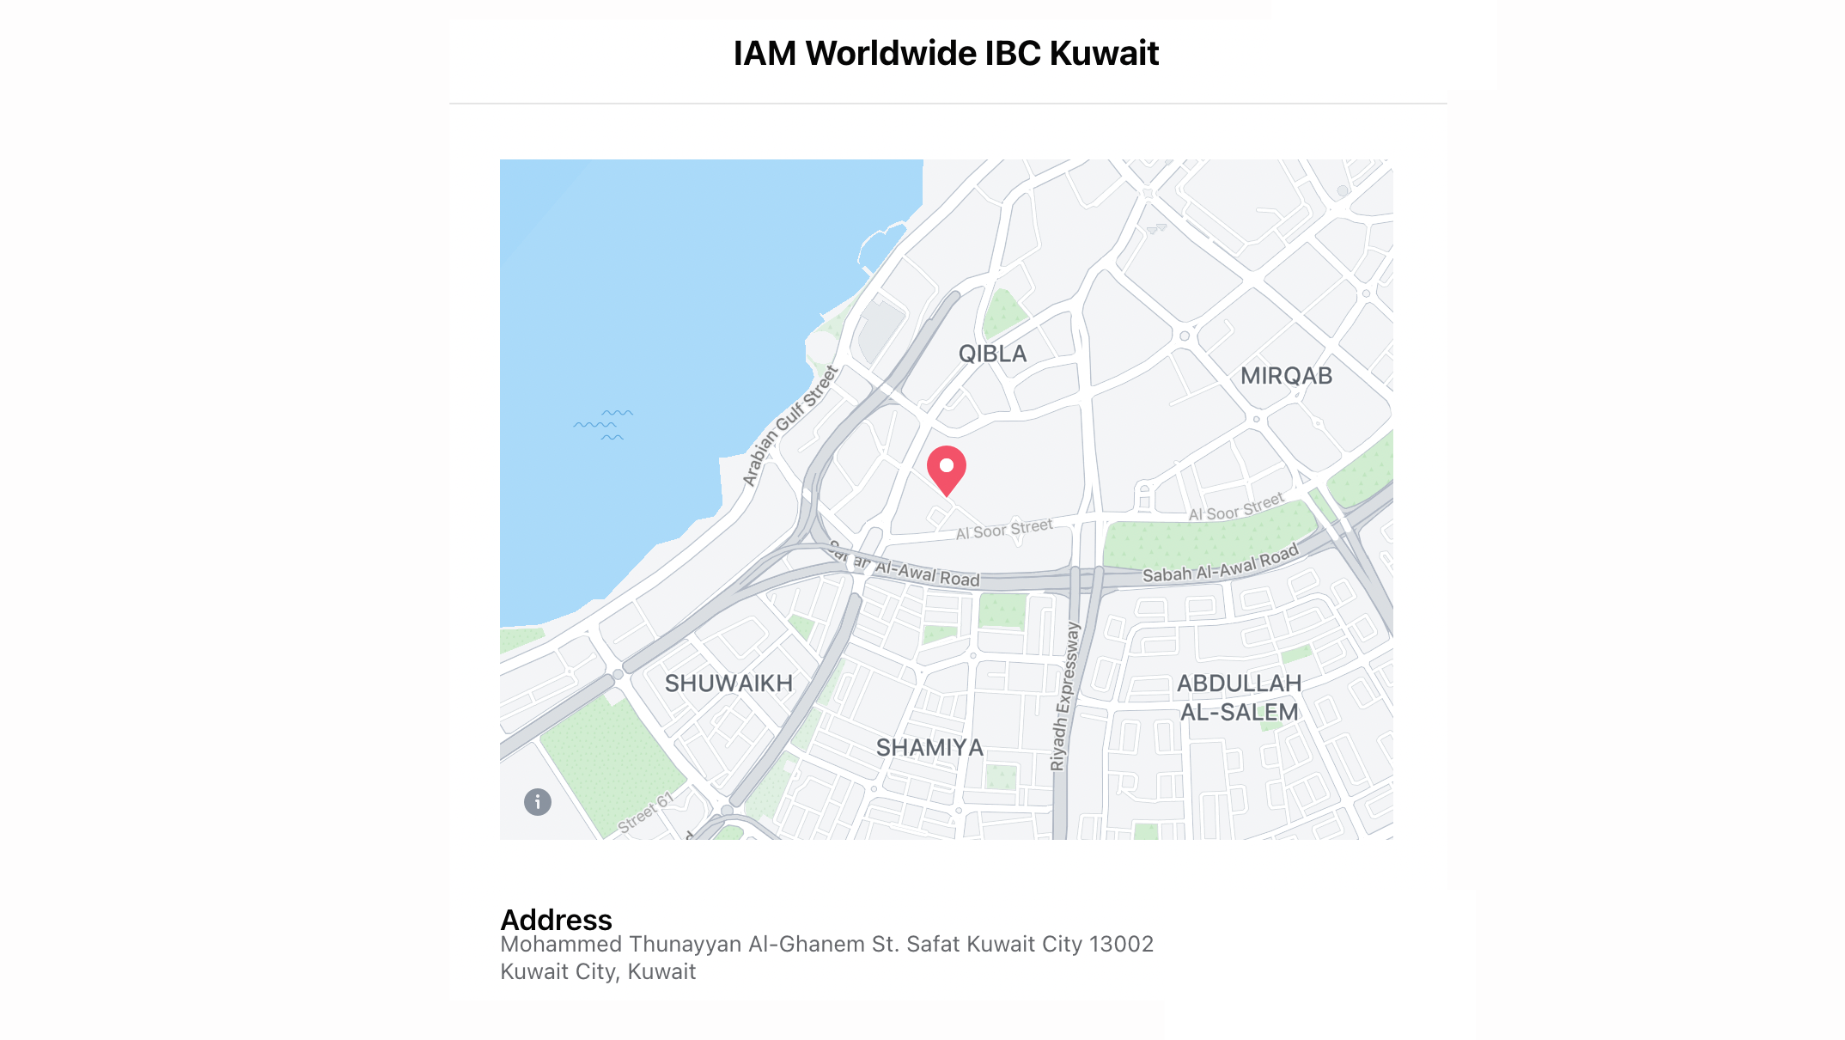 IBC KUWAIT map address | iamamazingorganicbarley.com